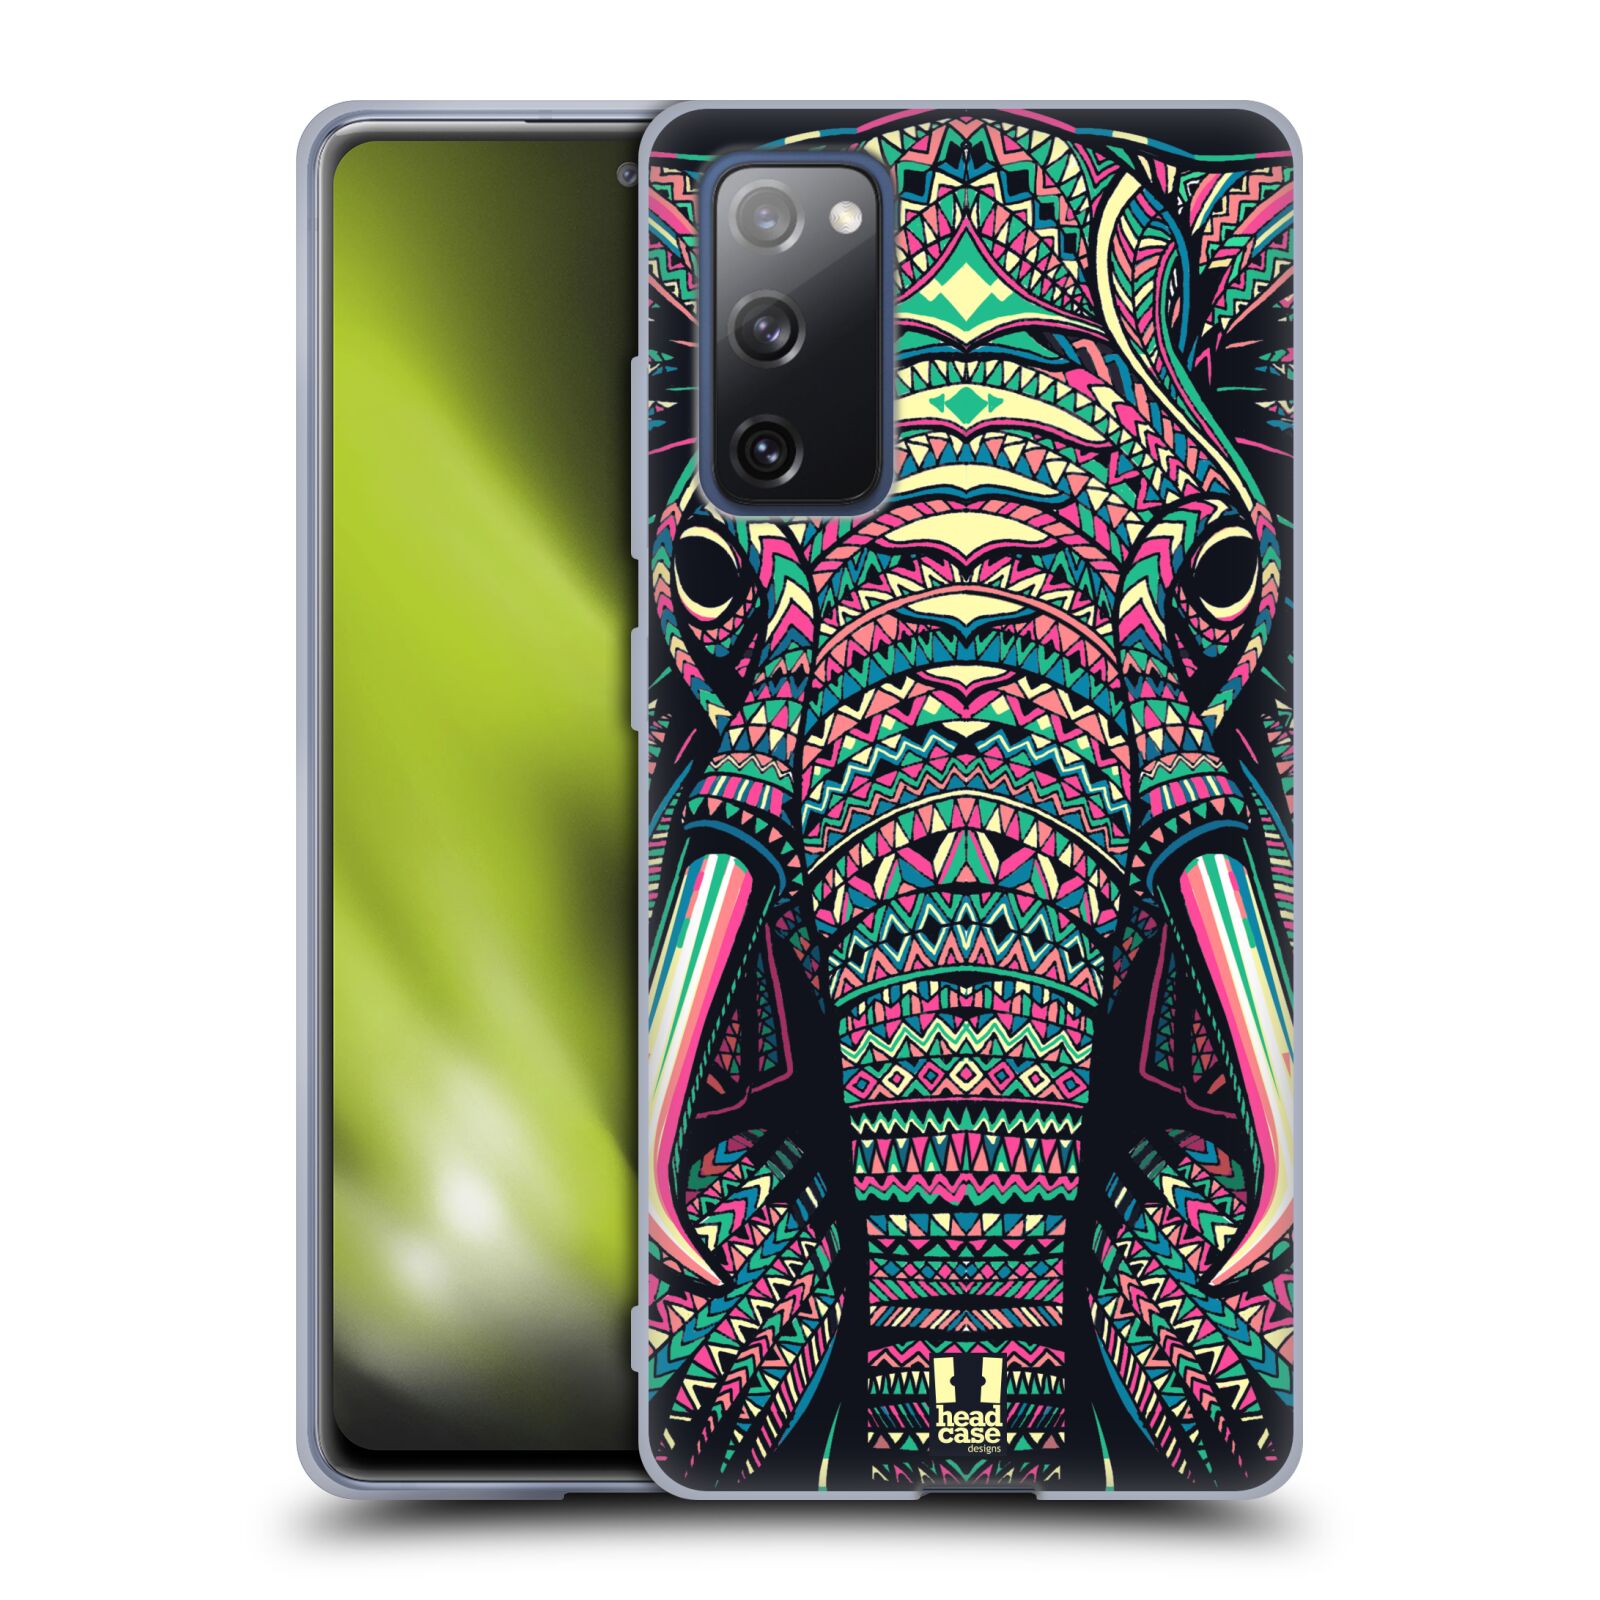 Plastový obal HEAD CASE na mobil Samsung Galaxy S20 FE / S20 FE 5G vzor Aztécký motiv zvíře 2 slon